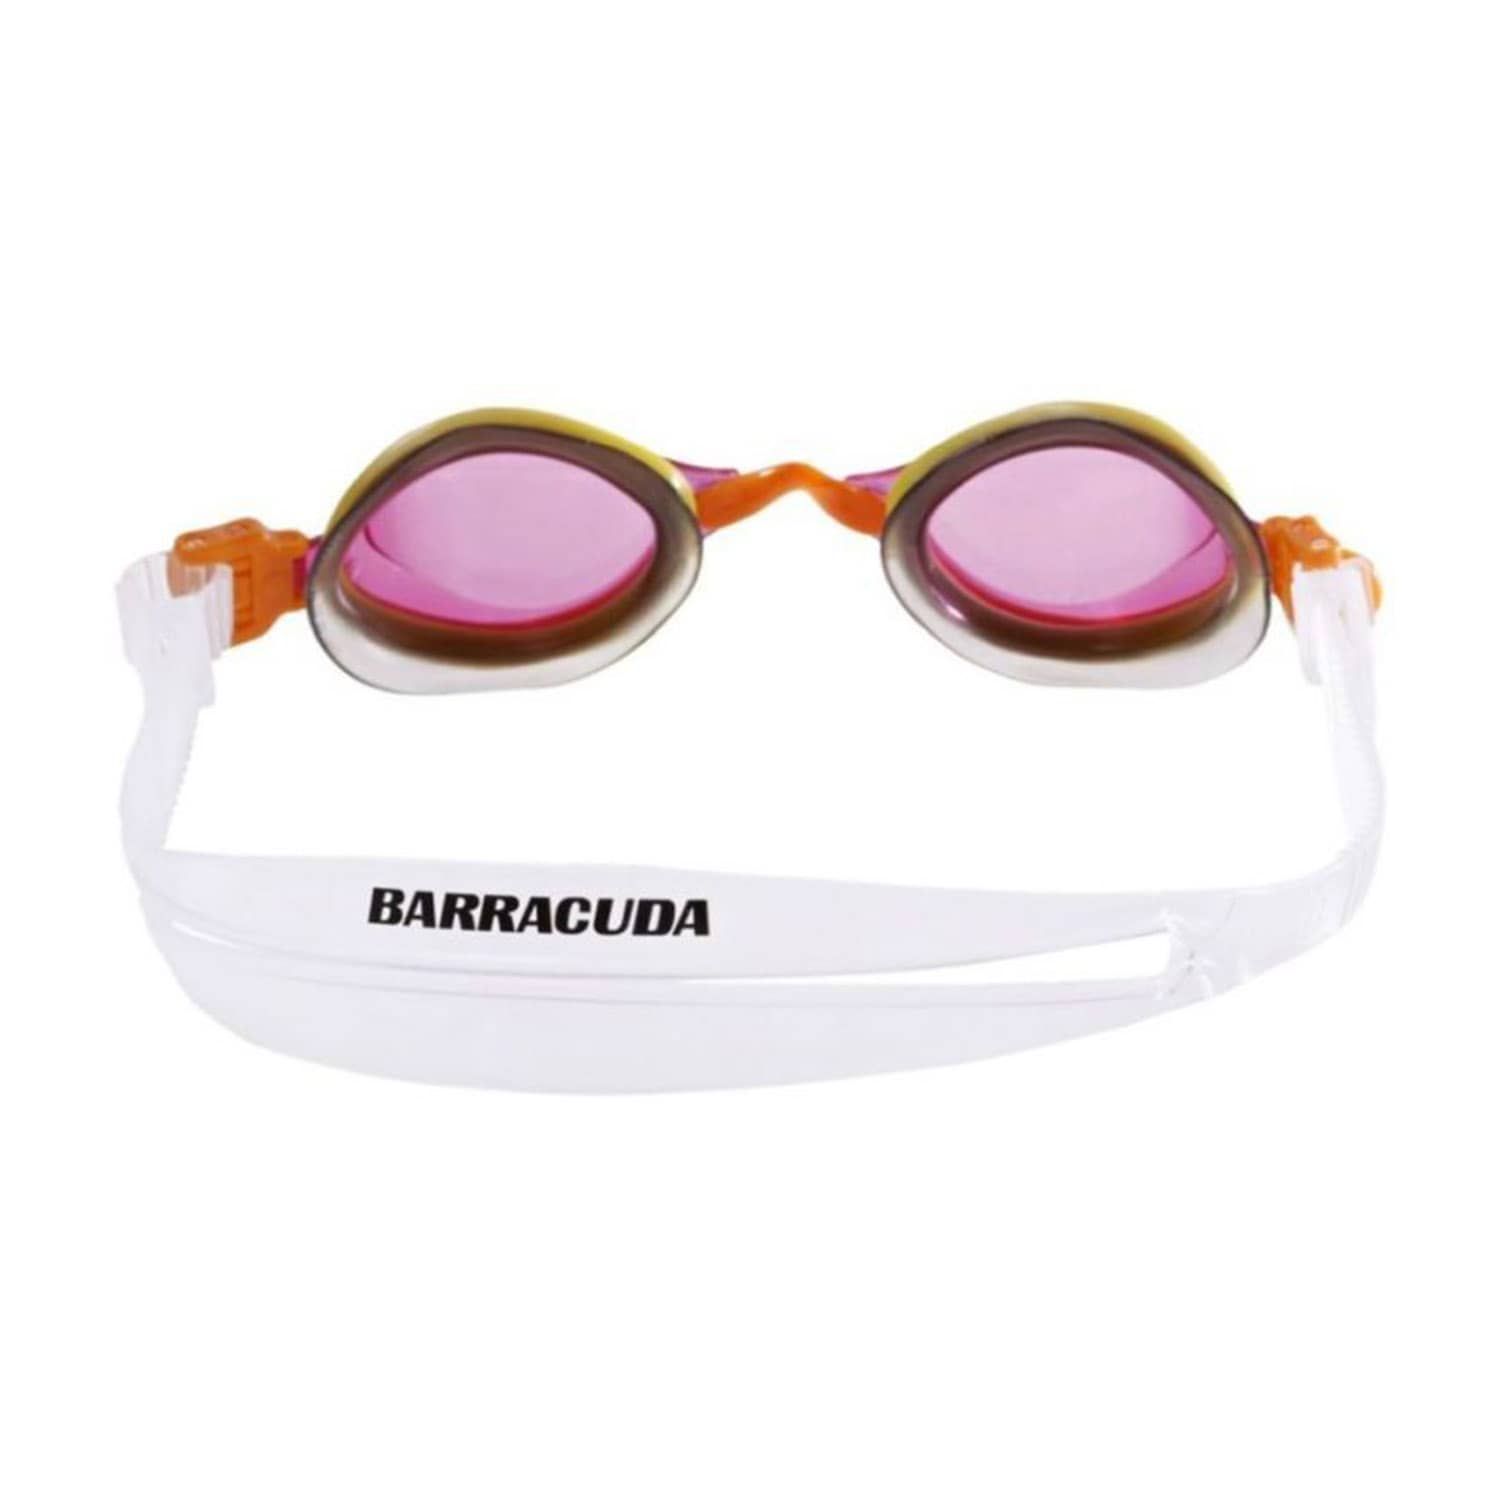 Barracuda Sunglasses Flash Sales